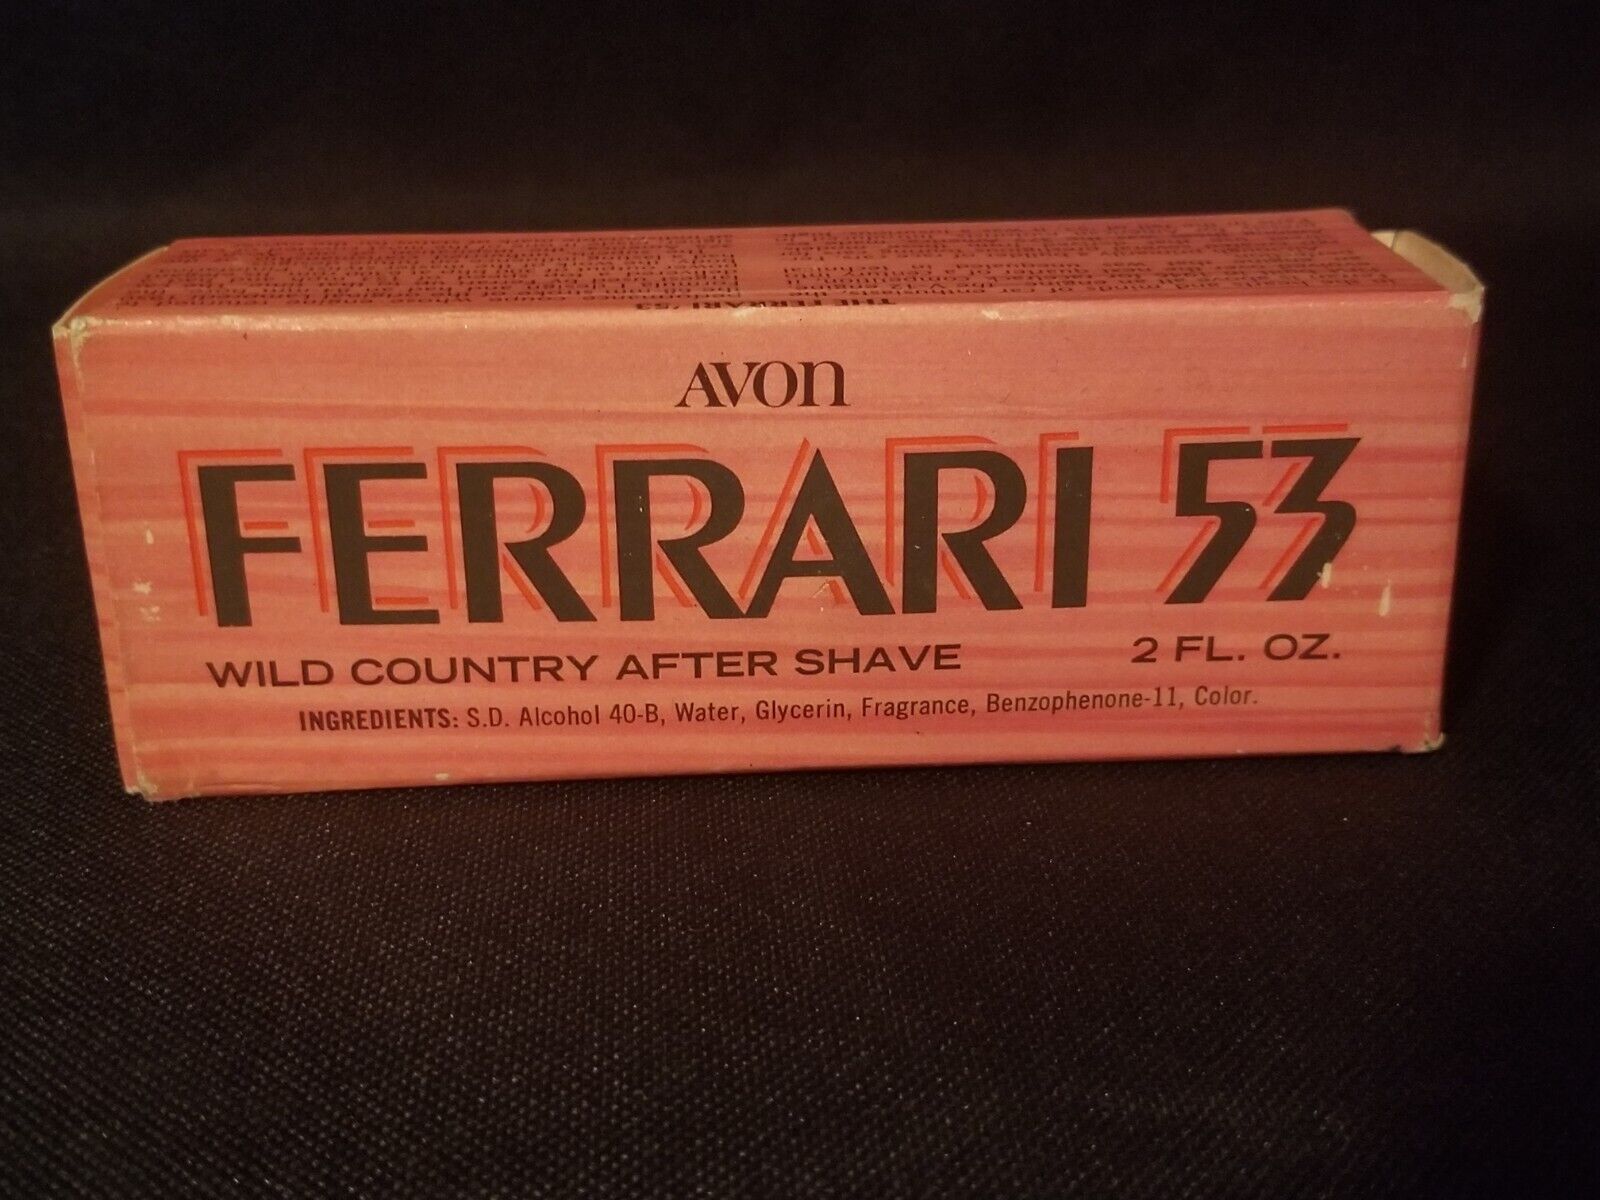 Ferrari 53 AVON Wild Country After Shave (2 fl oz) Vintage Glass Bottle with Box